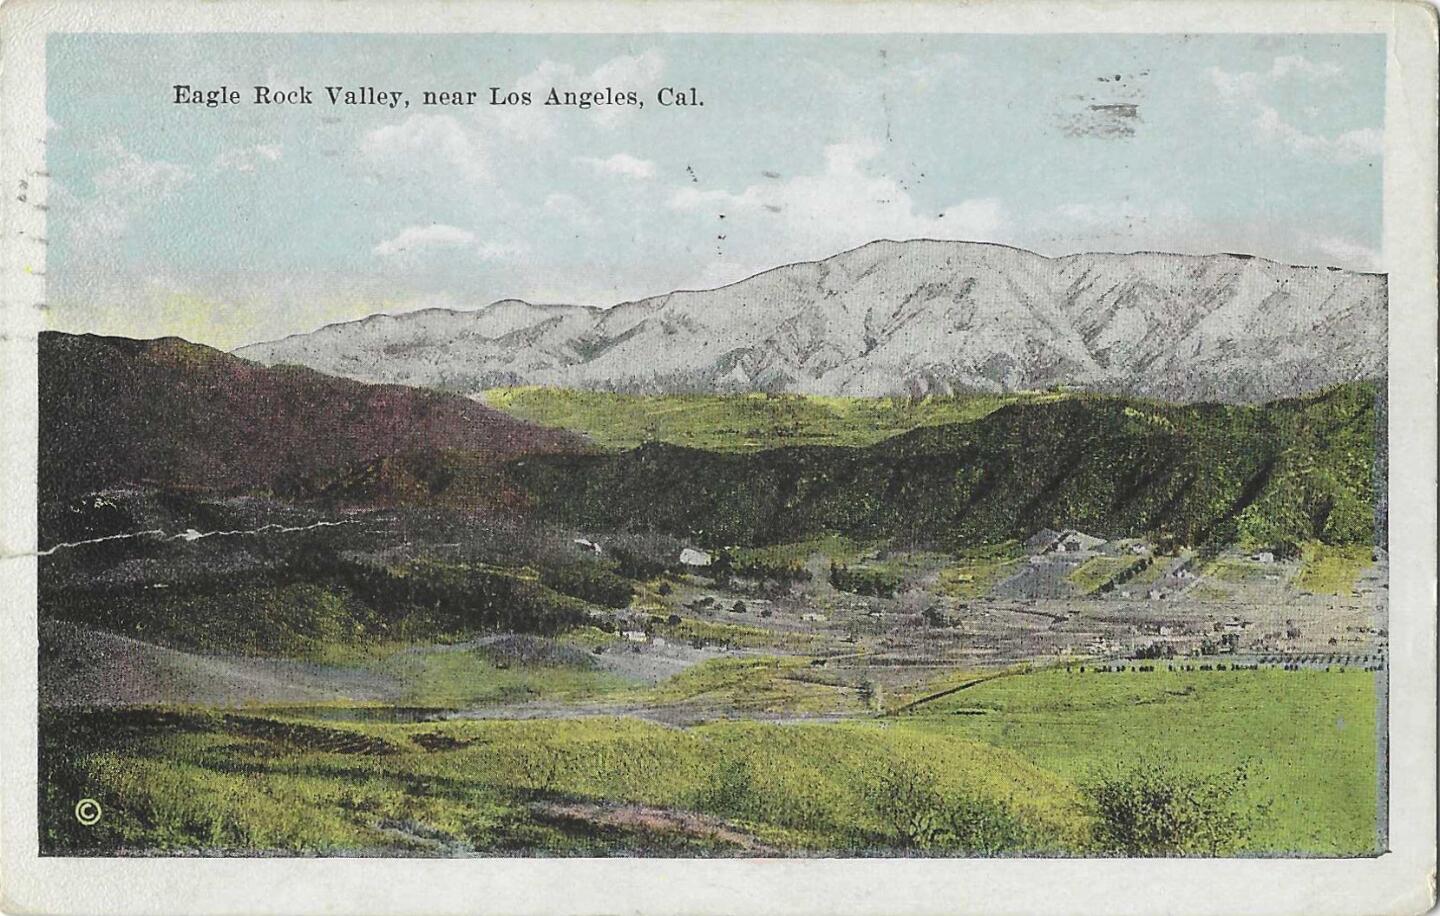 Vintage postcard depicts "Eagle Rock Valley, near Los Angeles, Cal."